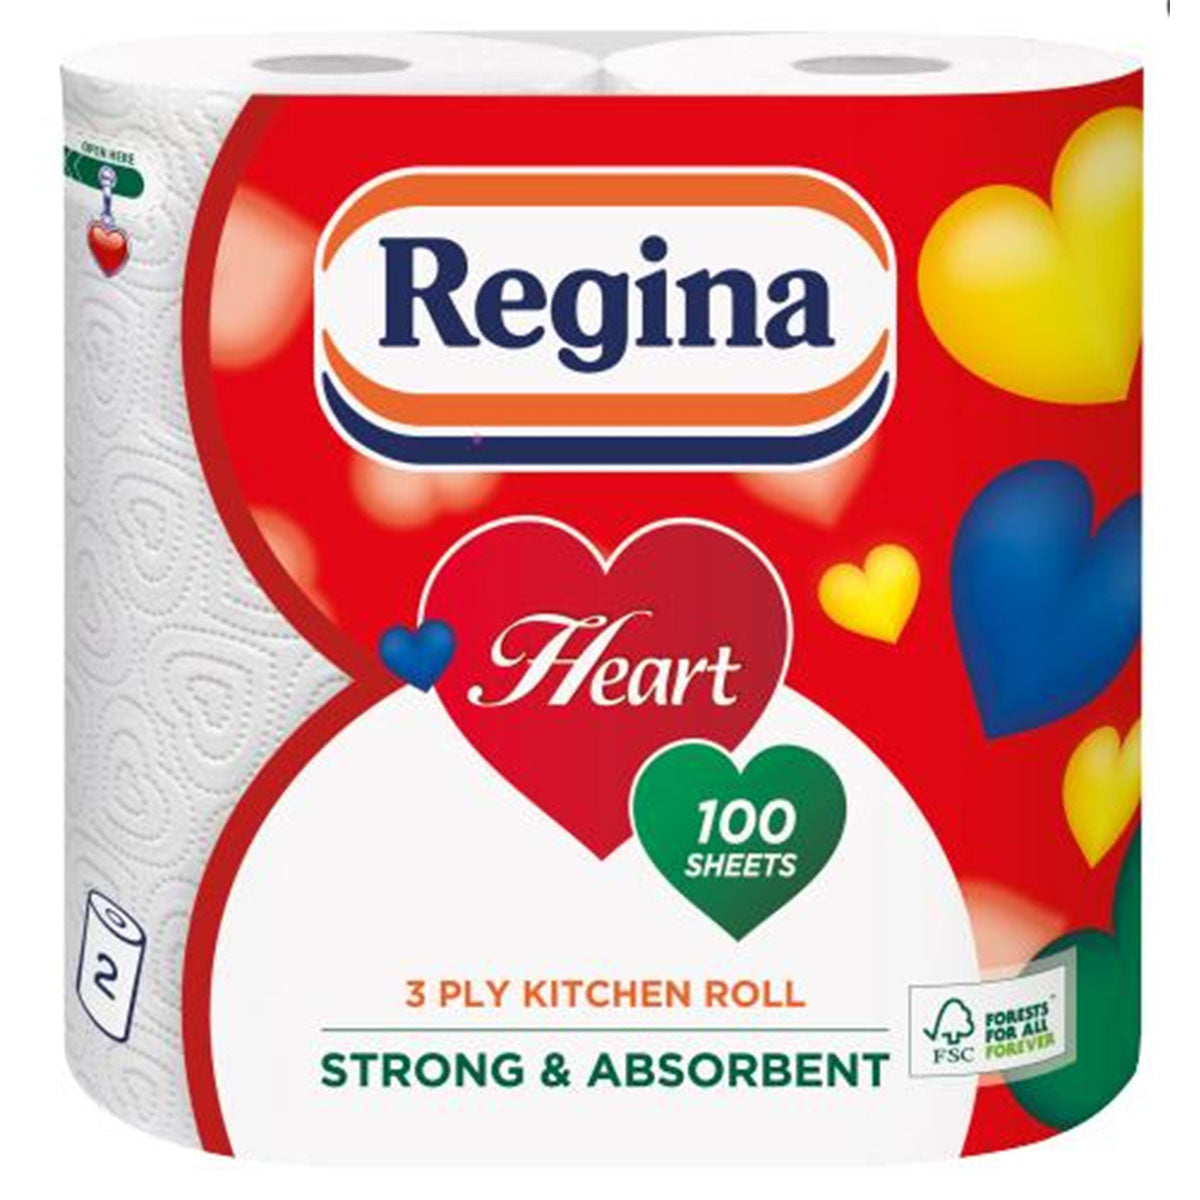 Regina - Heart Kitchen 2 roll - 100 Sheets - Continental Food Store